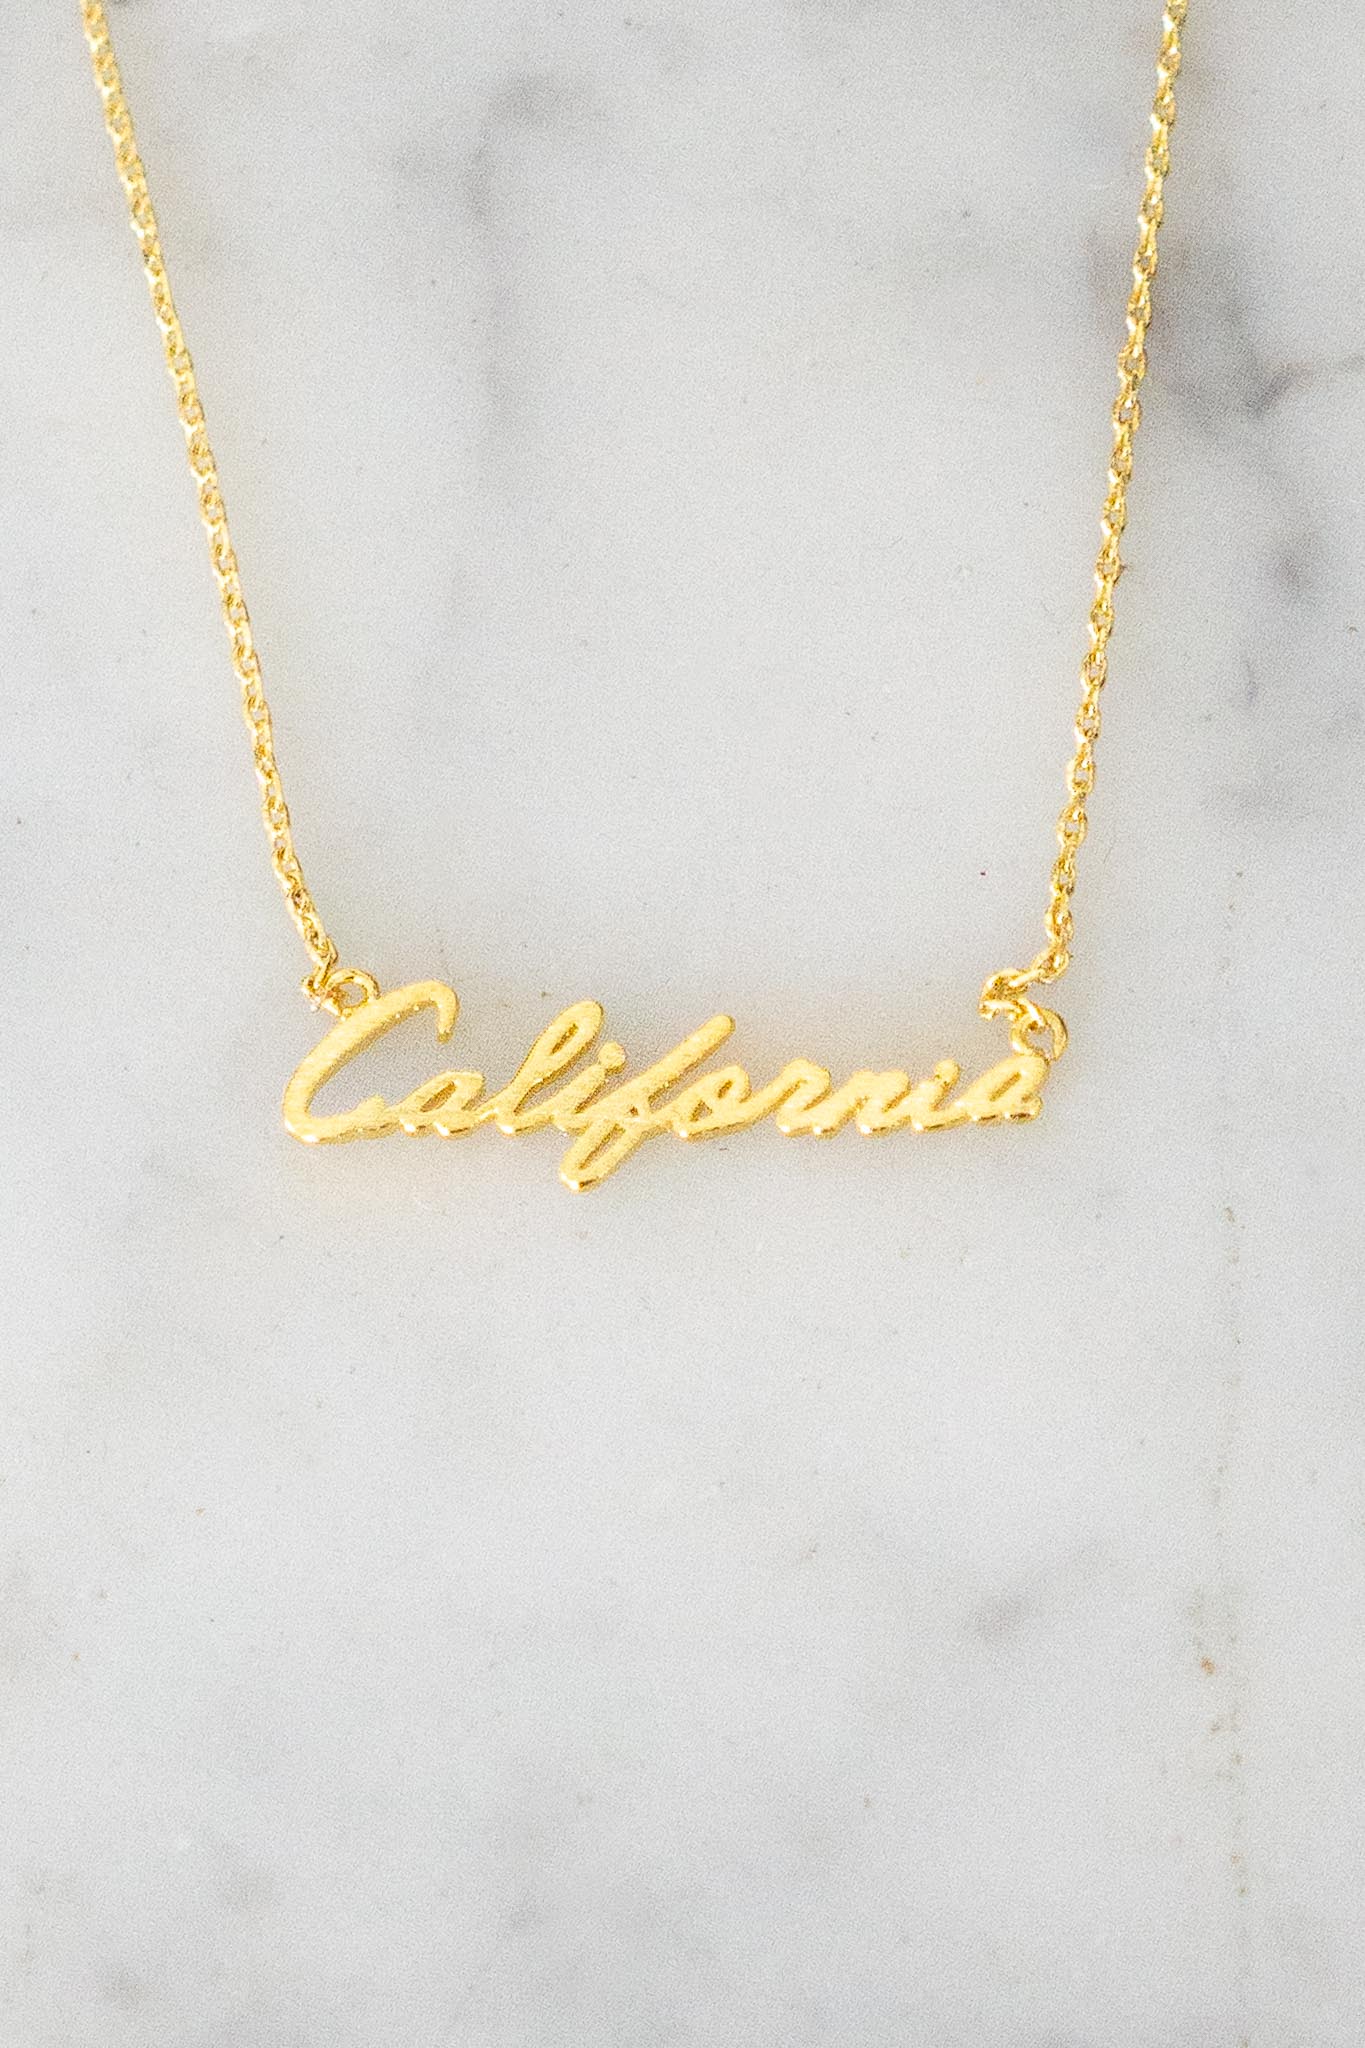 California Script Necklace Jewelry Fame